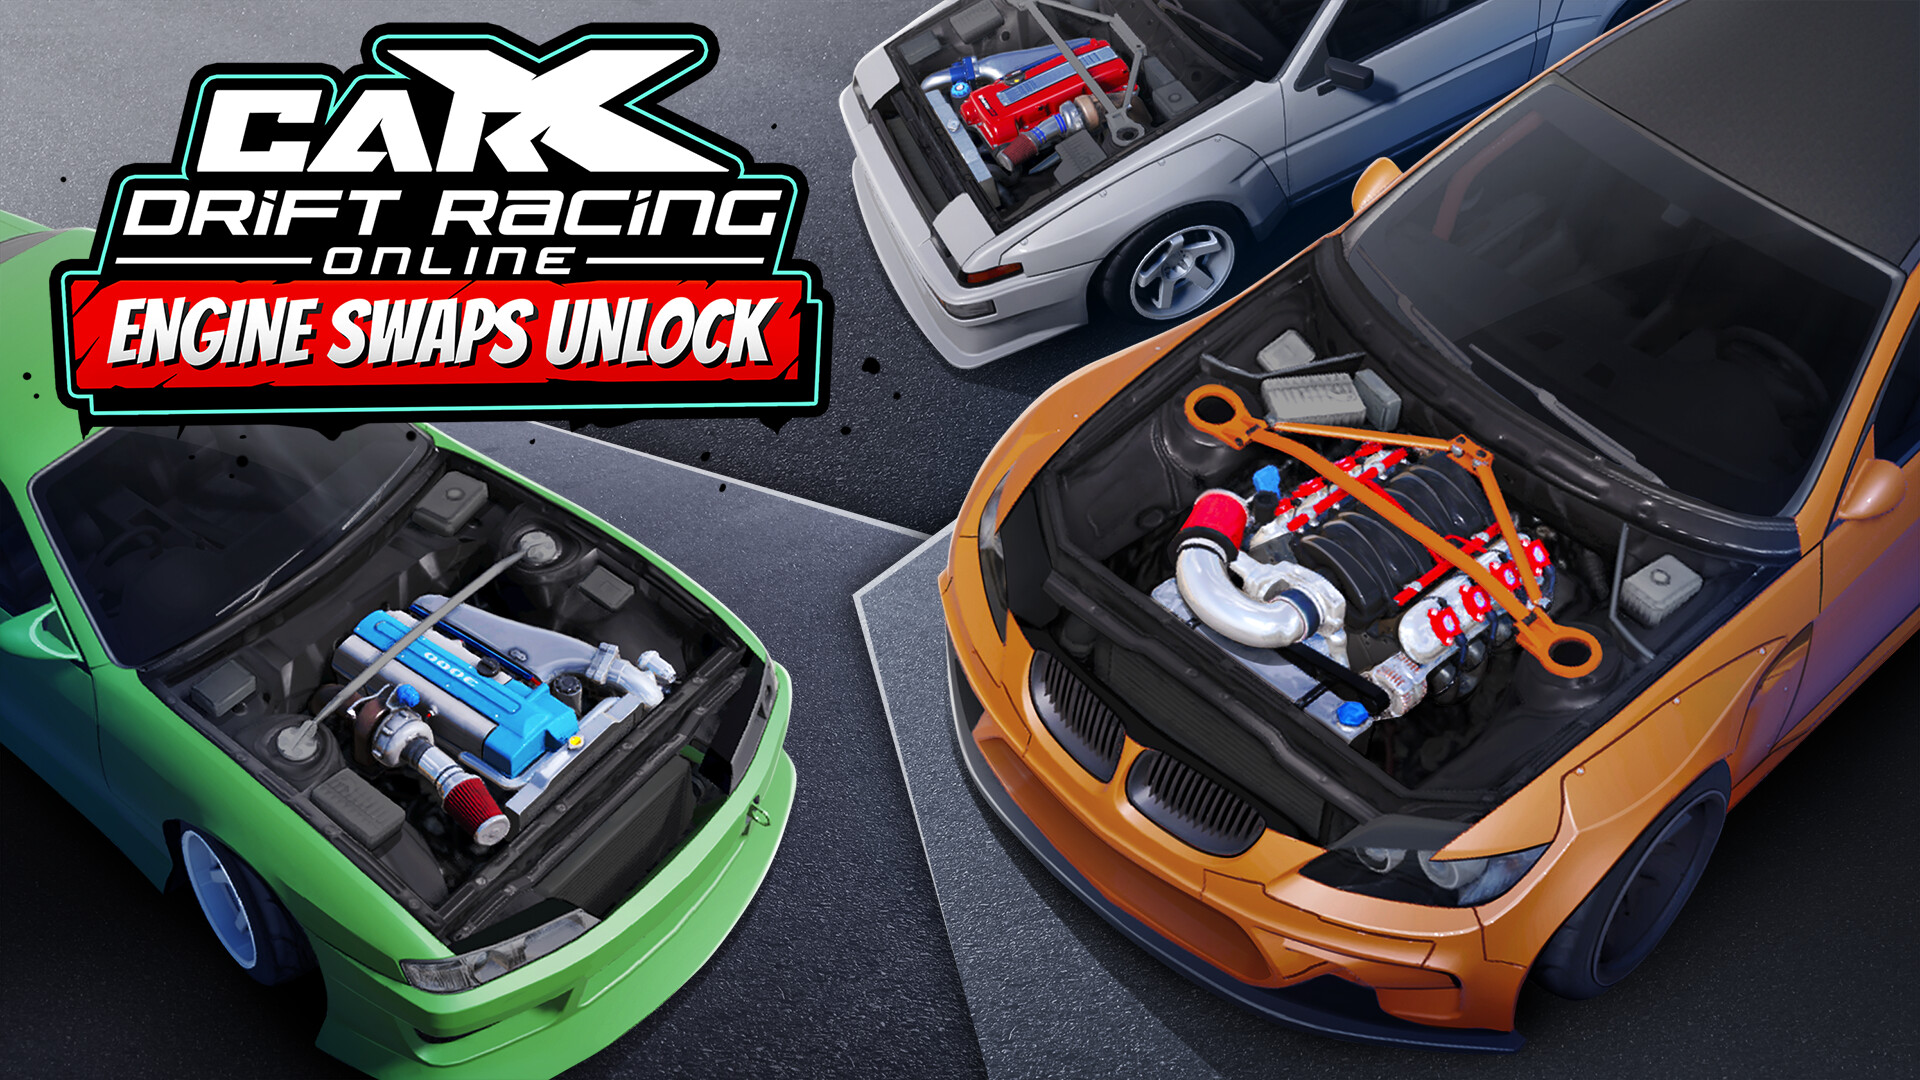 CarX Drift Racing Online - Engine Swaps Unlock on Steam